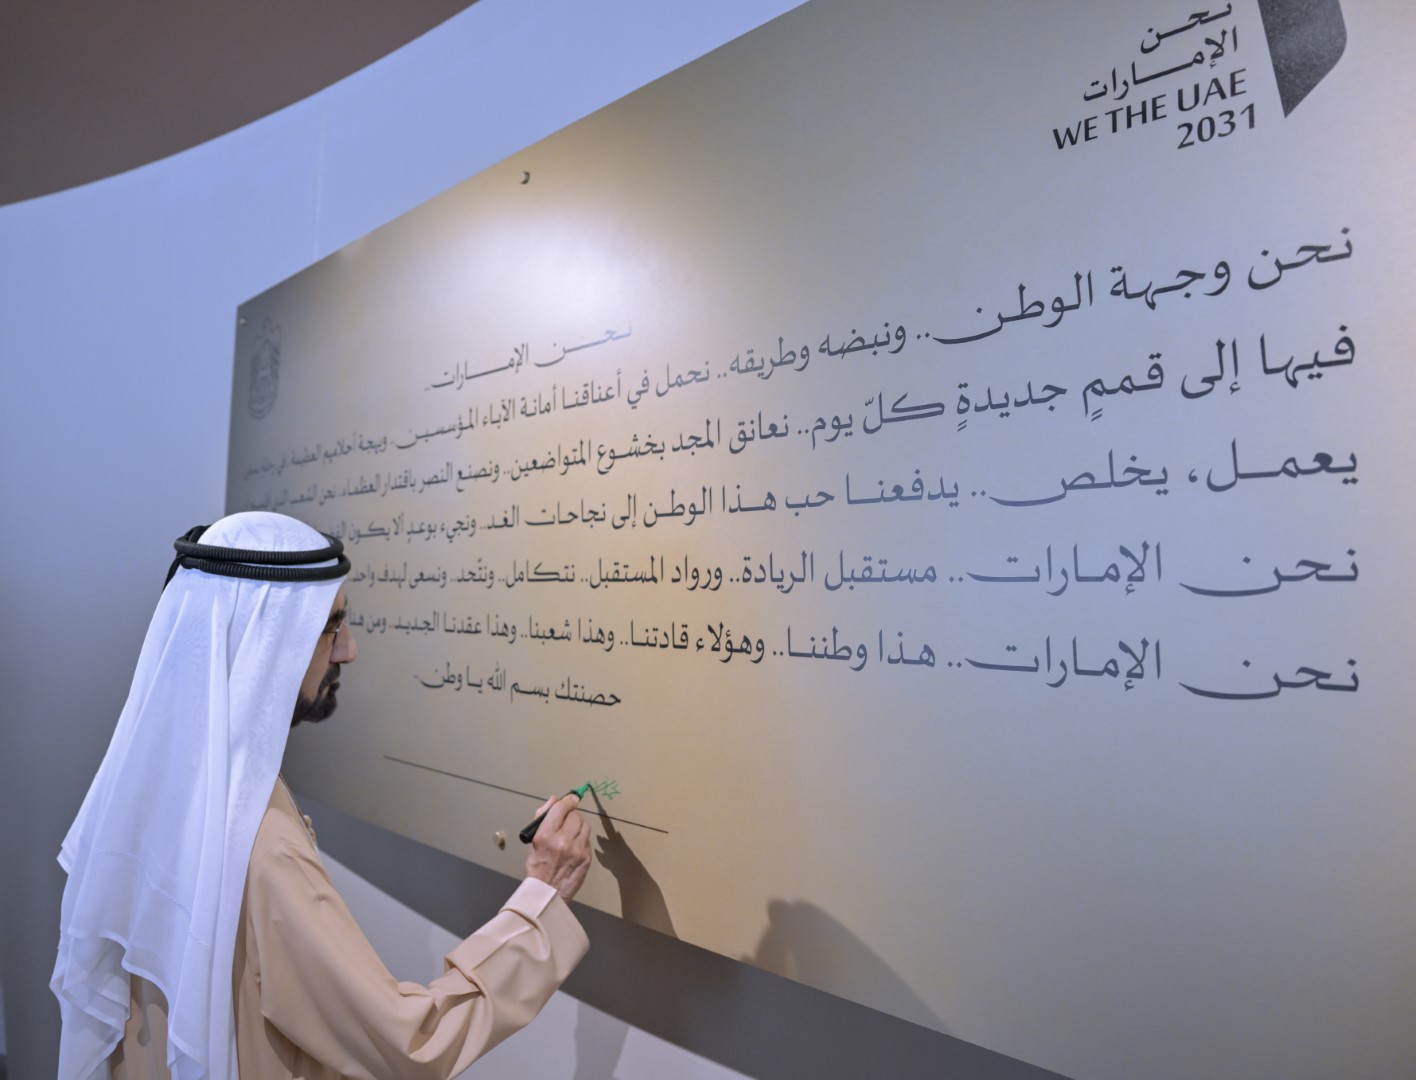 HH Sheikh Mohammed bin Rashid Al Maktoum, Vice President and Prime Minister of the UAE and Ruler of Dubai, signs We The UAE 2031 10-year plan on whiteboard